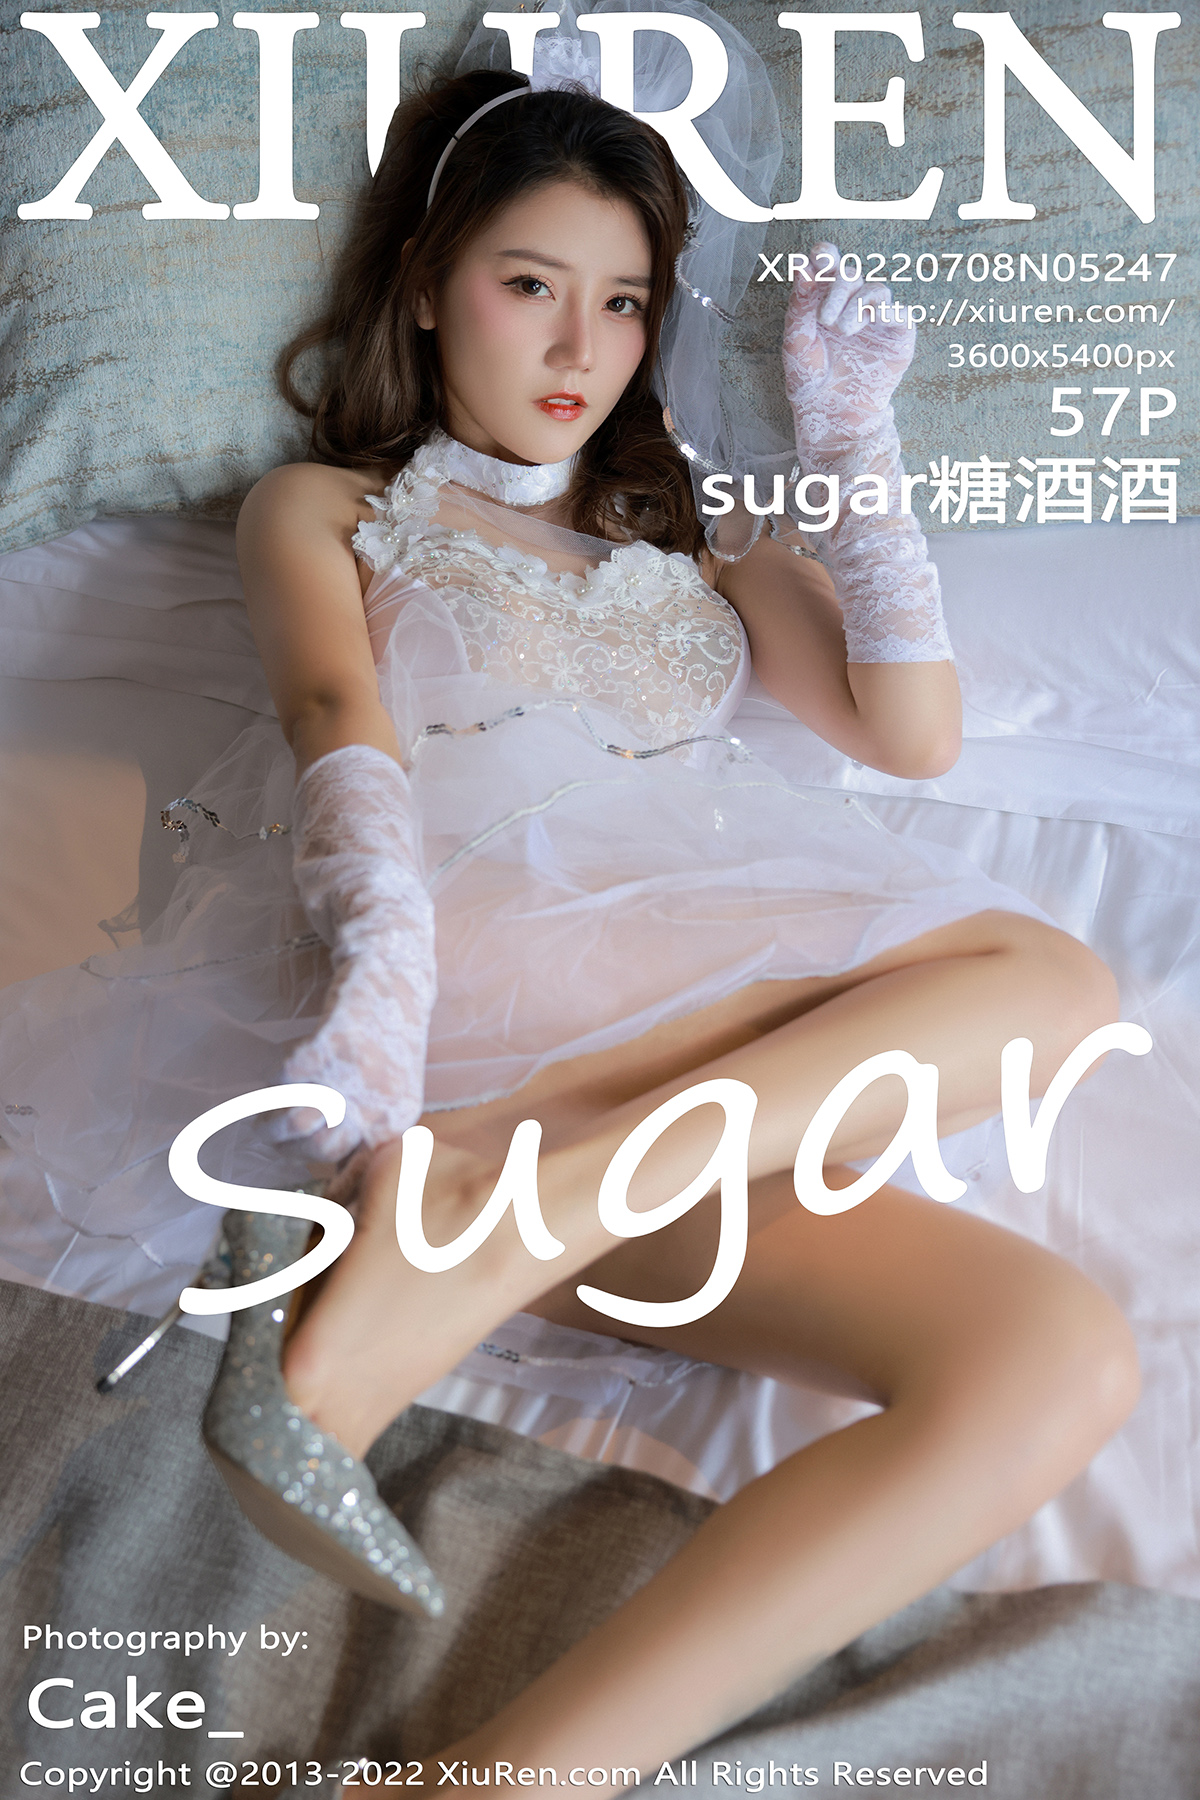 【XiuRen秀人網】2022.07.08 Vol.5247 sugar糖酒酒 完整版無水印寫真【57P】 - 貼圖 - 清涼寫真 -